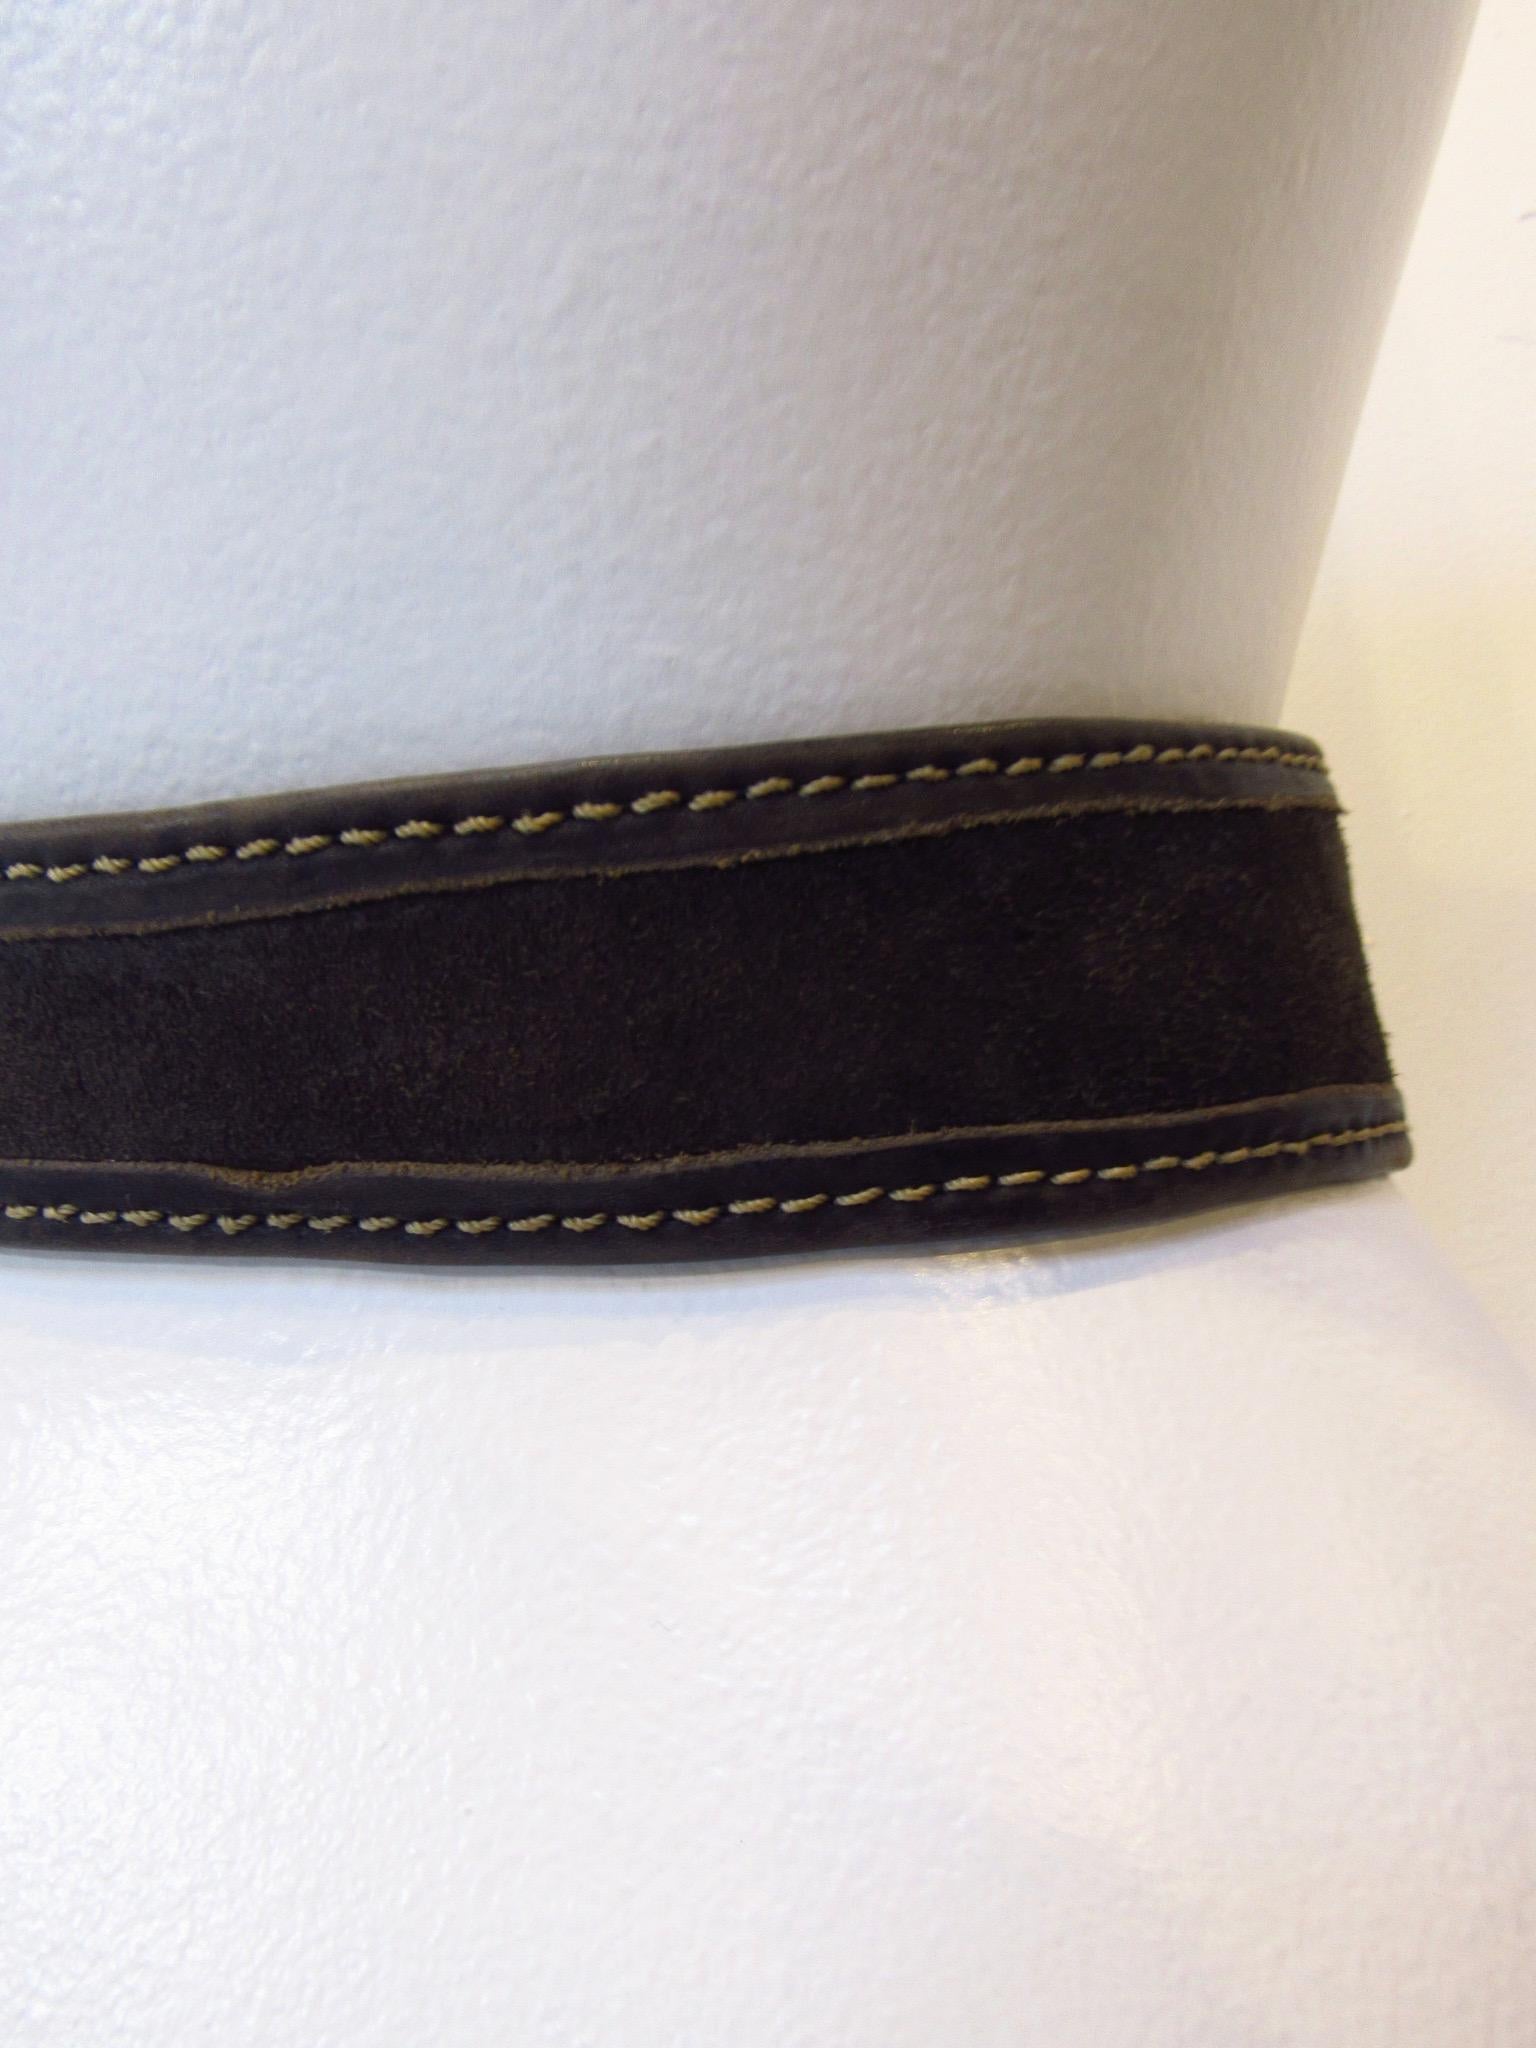 Maison Martin Margiela Asymmetrical Saddel Leather Belt In New Condition For Sale In Laguna Beach, CA